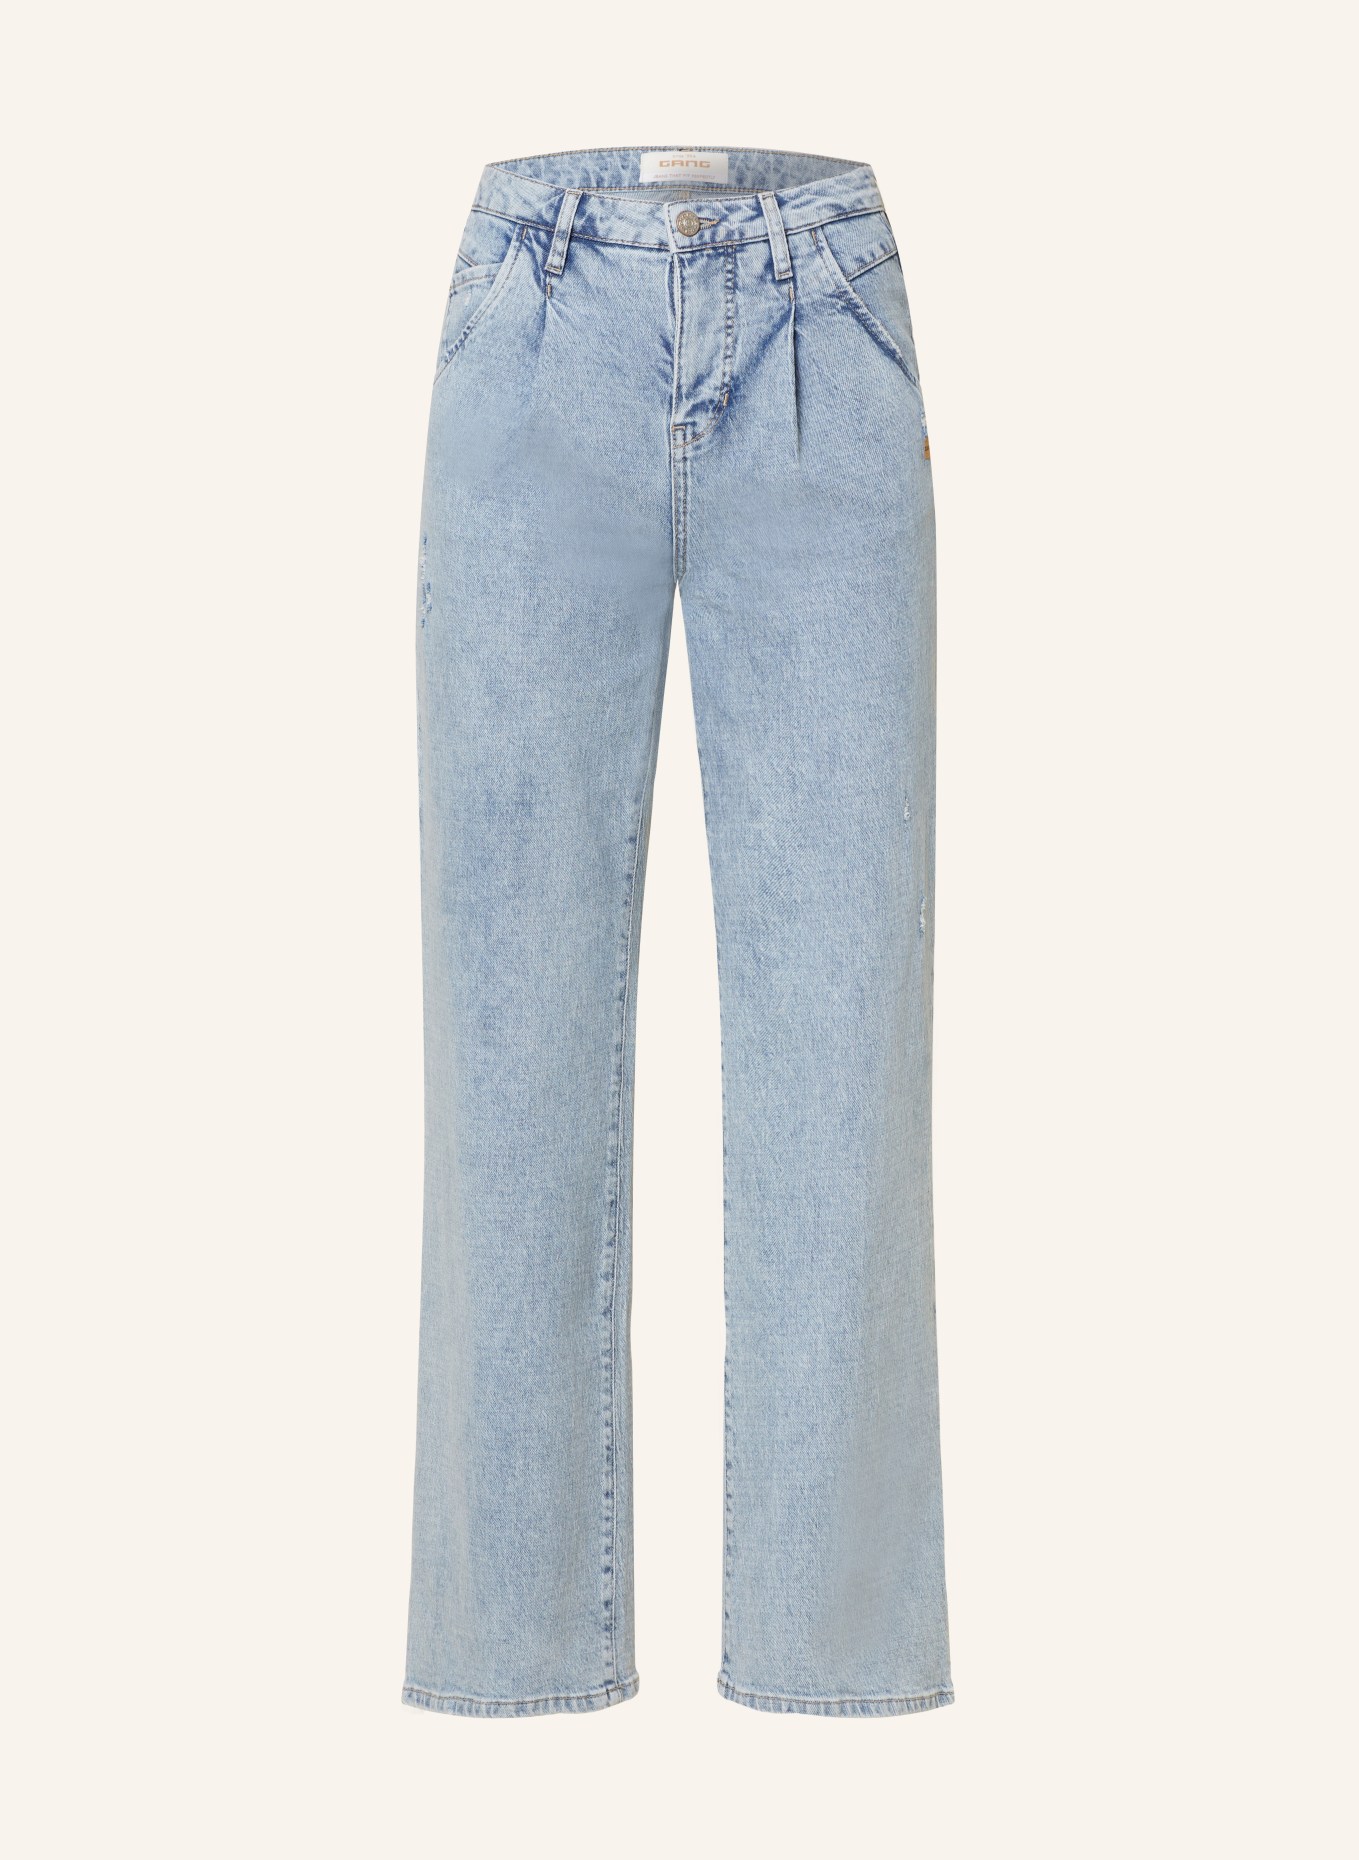 GANG Flared Jeans SILVIA, Farbe: 7716 baby vintage wash (Bild 1)